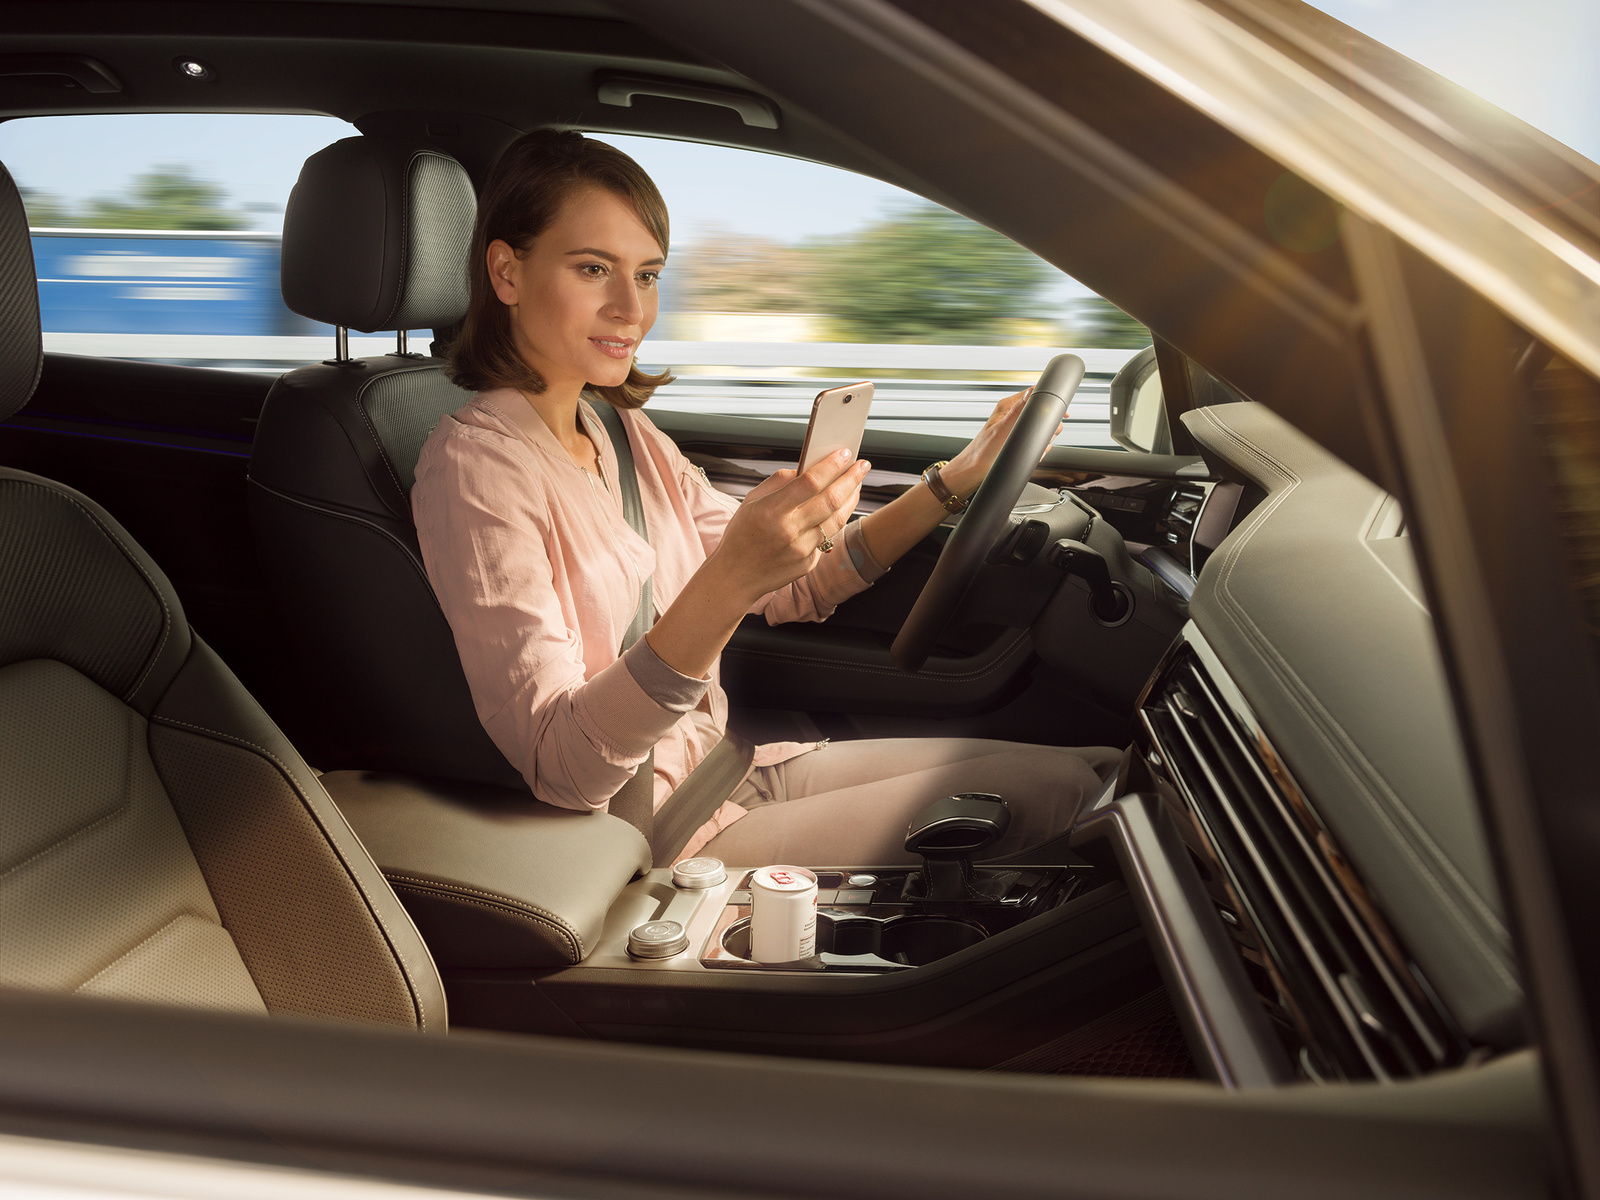 Camera-based lifesaver: Bosch helps cars keep an eye on their passengers